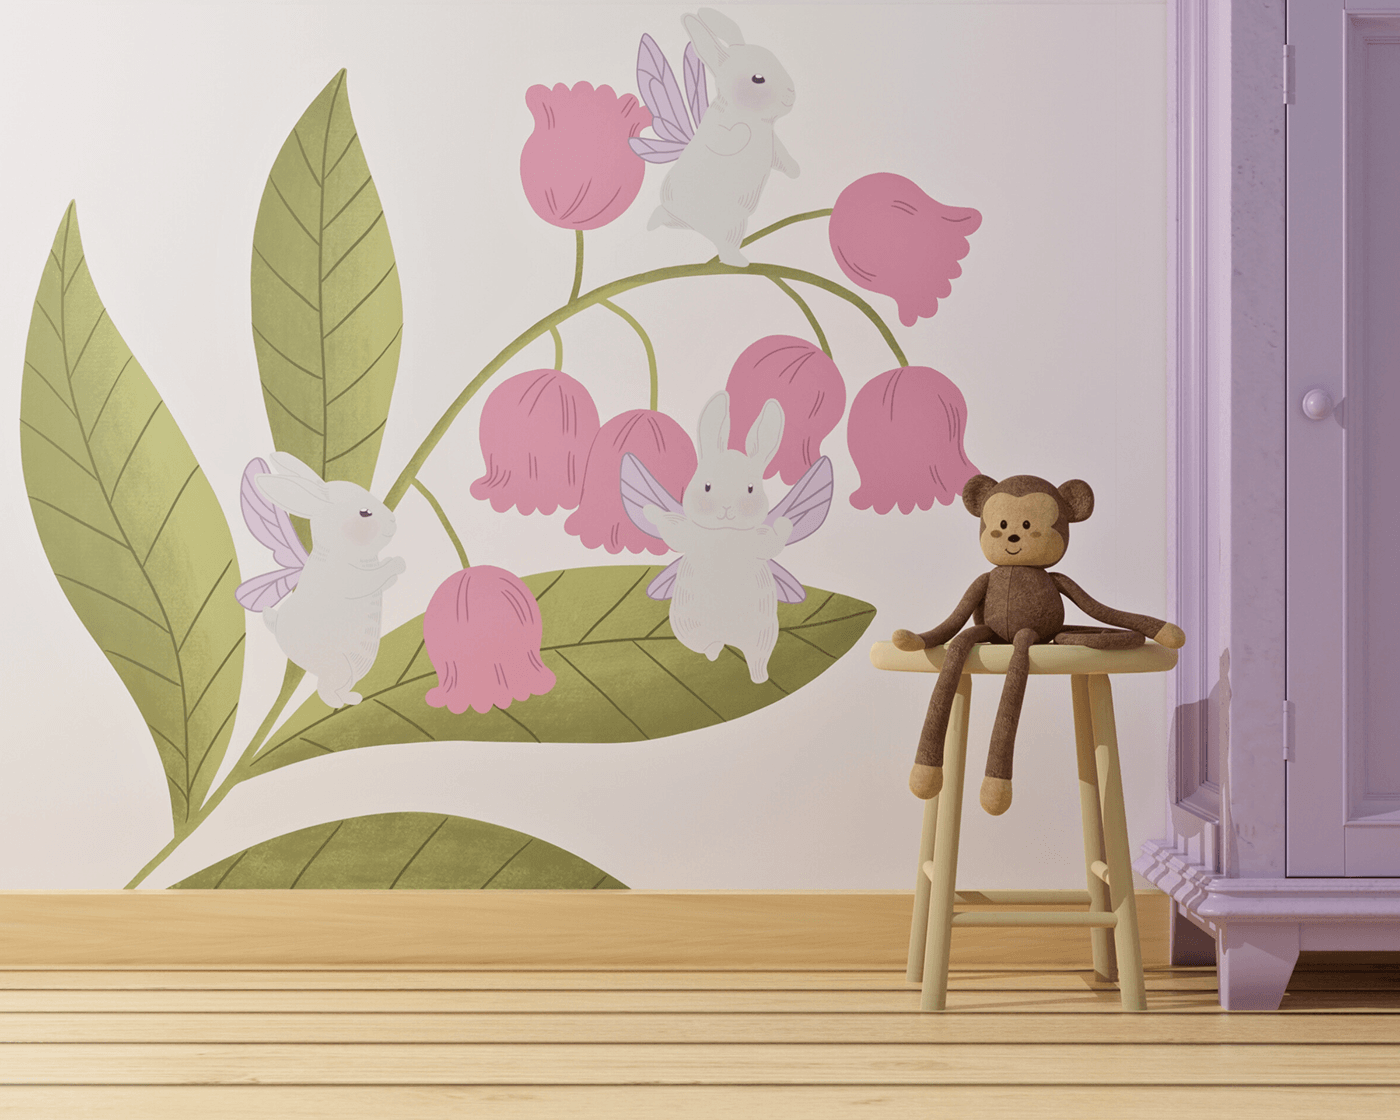 fairy Flowers wallpaper Digital Art  ILLUSTRATION  Character design  floral pattern walldesign interior design  kids illustration